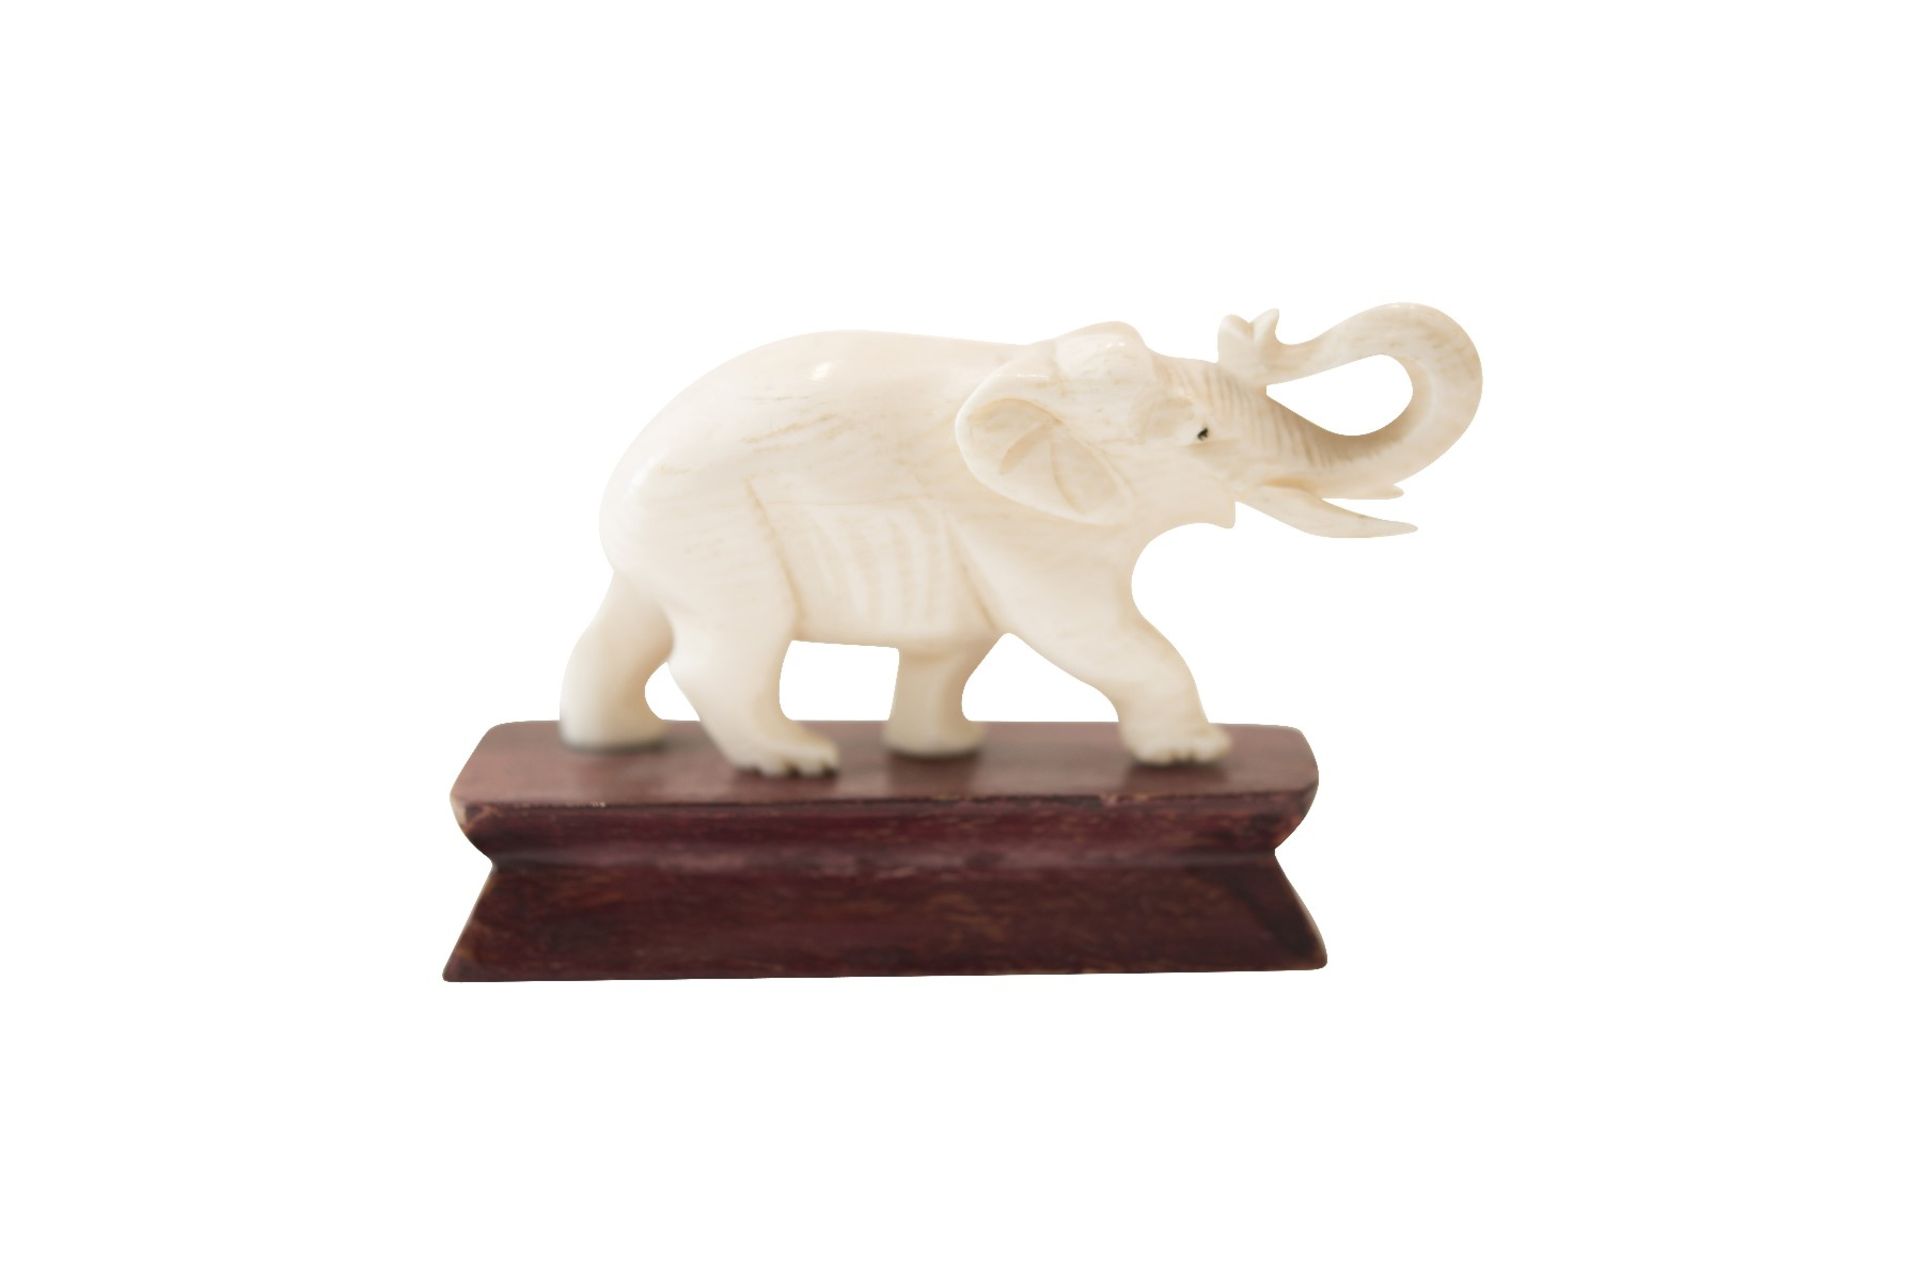 Small elephant on wooden base - Image 6 of 6